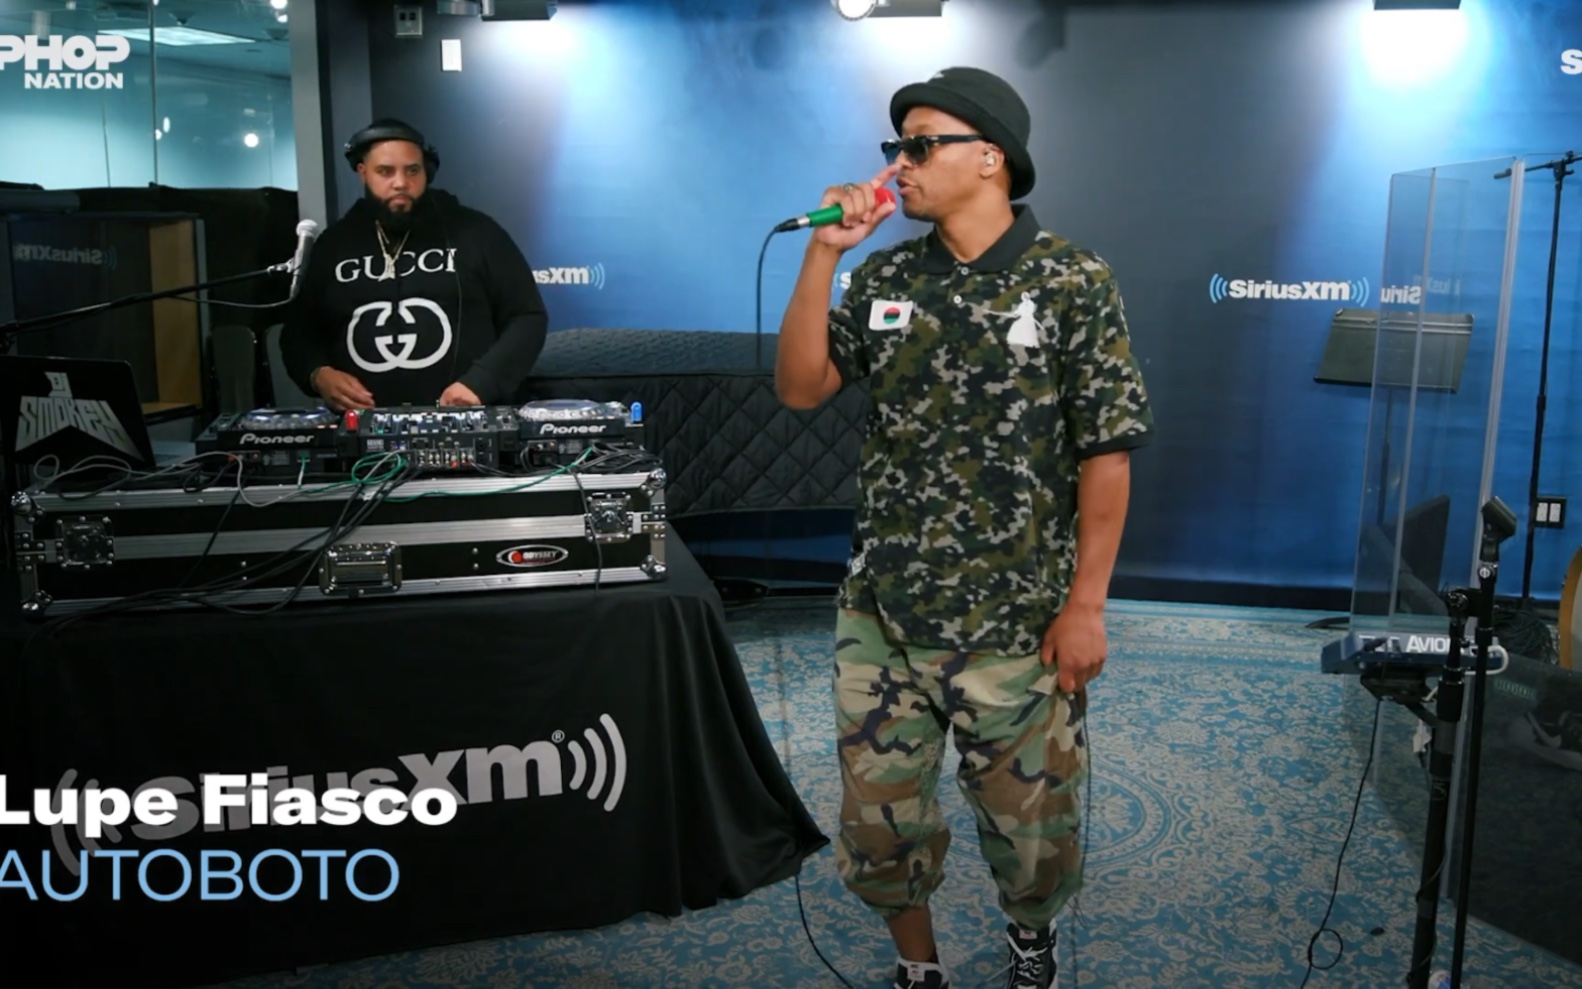 AUTOBOTO—Lupe Fiasco|Live Performance | SiriusXM